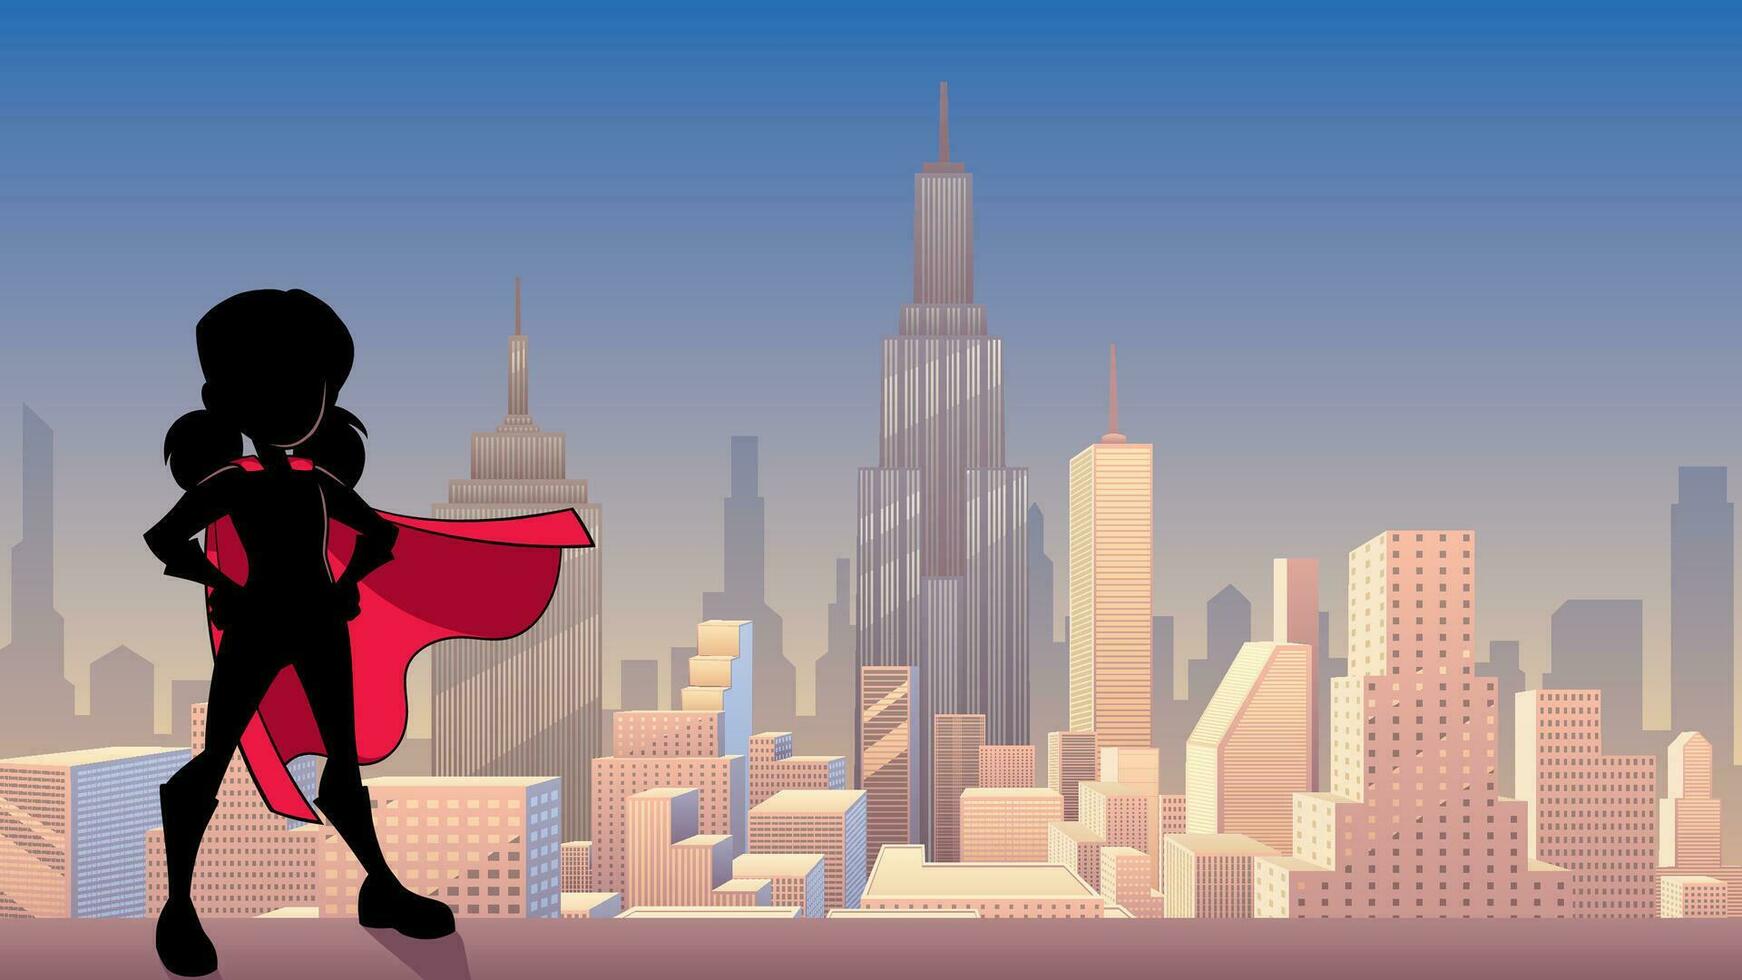 Super Girl City Silhouette vector